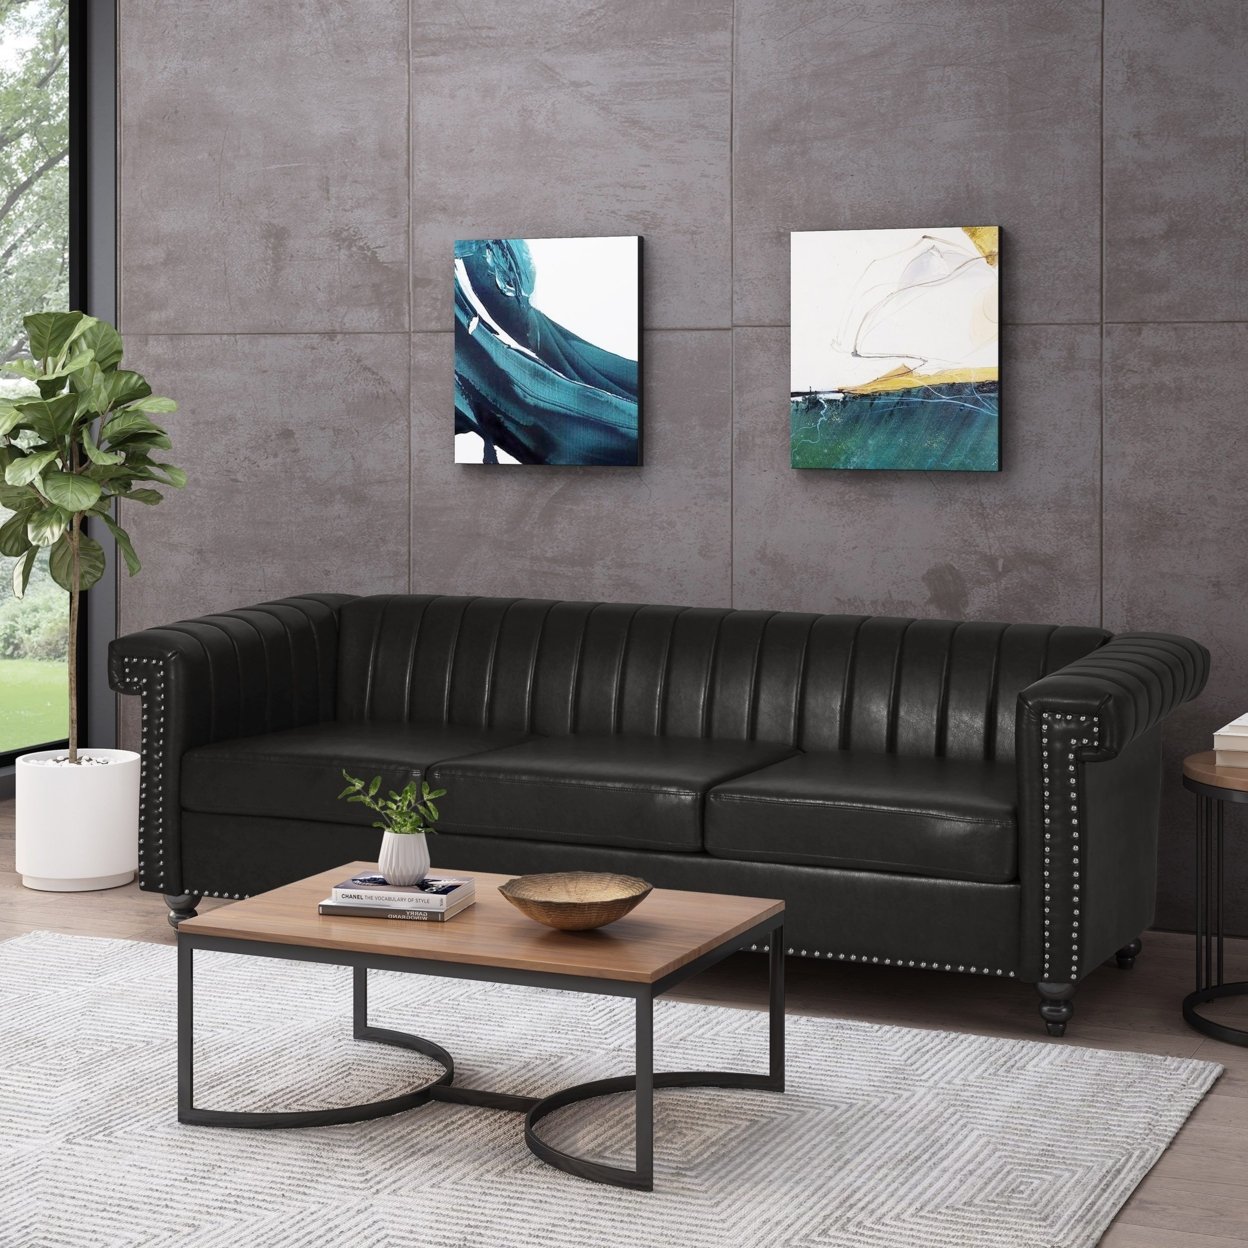 Donley Contemporary Channel Stitch 3 Seater Sofa With Nailhead Trim - Dark Brown/midnight